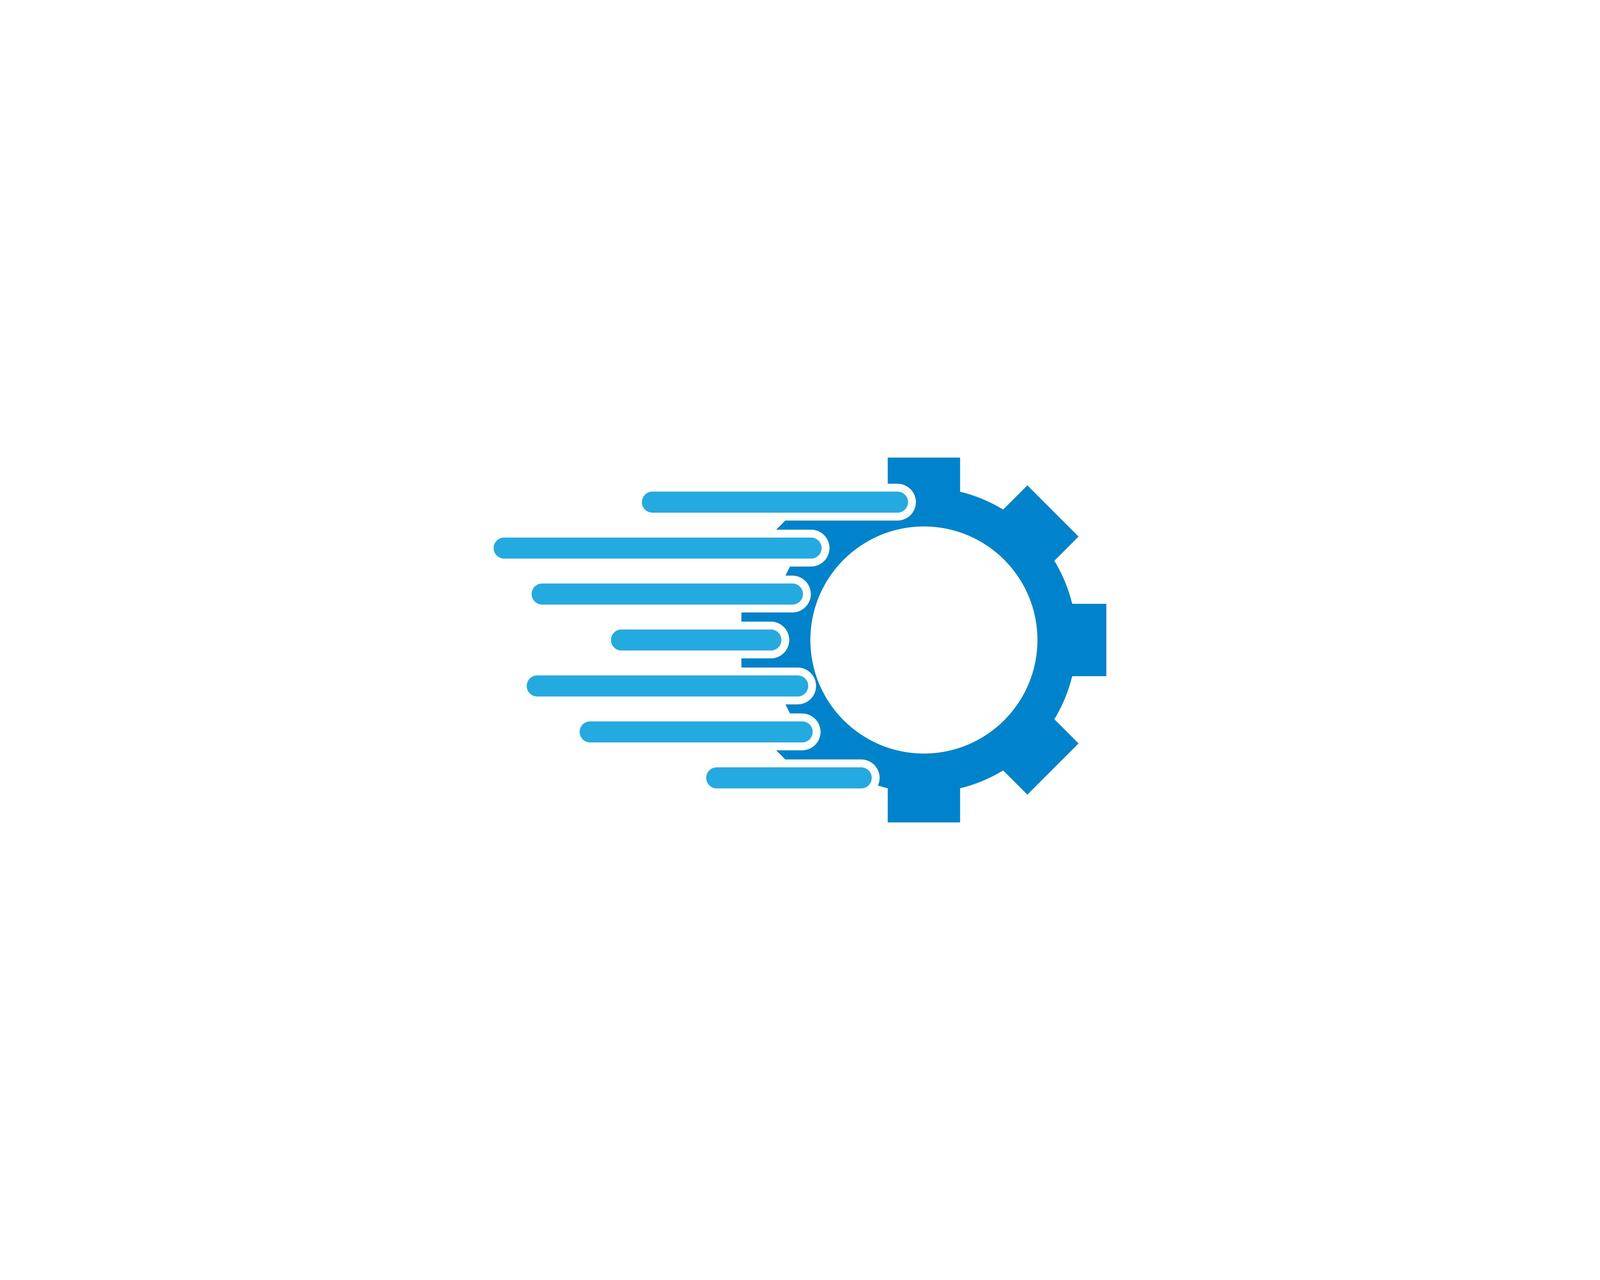 Gear machinery logo icon by Attades19